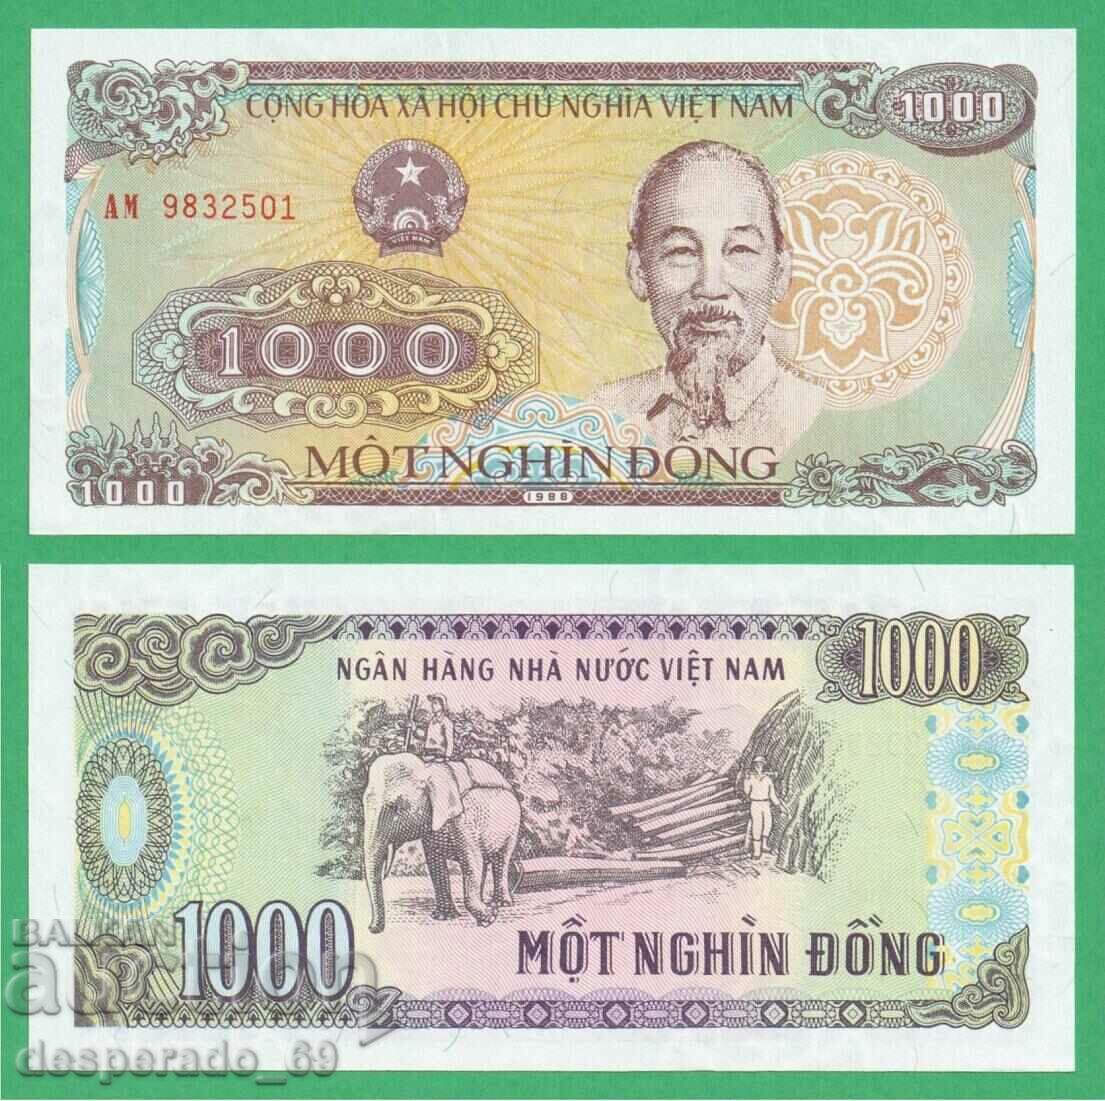 (¯ ° '• .¸ VIETNAM 1000 донг 1988 UNC ¯ ¯ ¯ ¯)